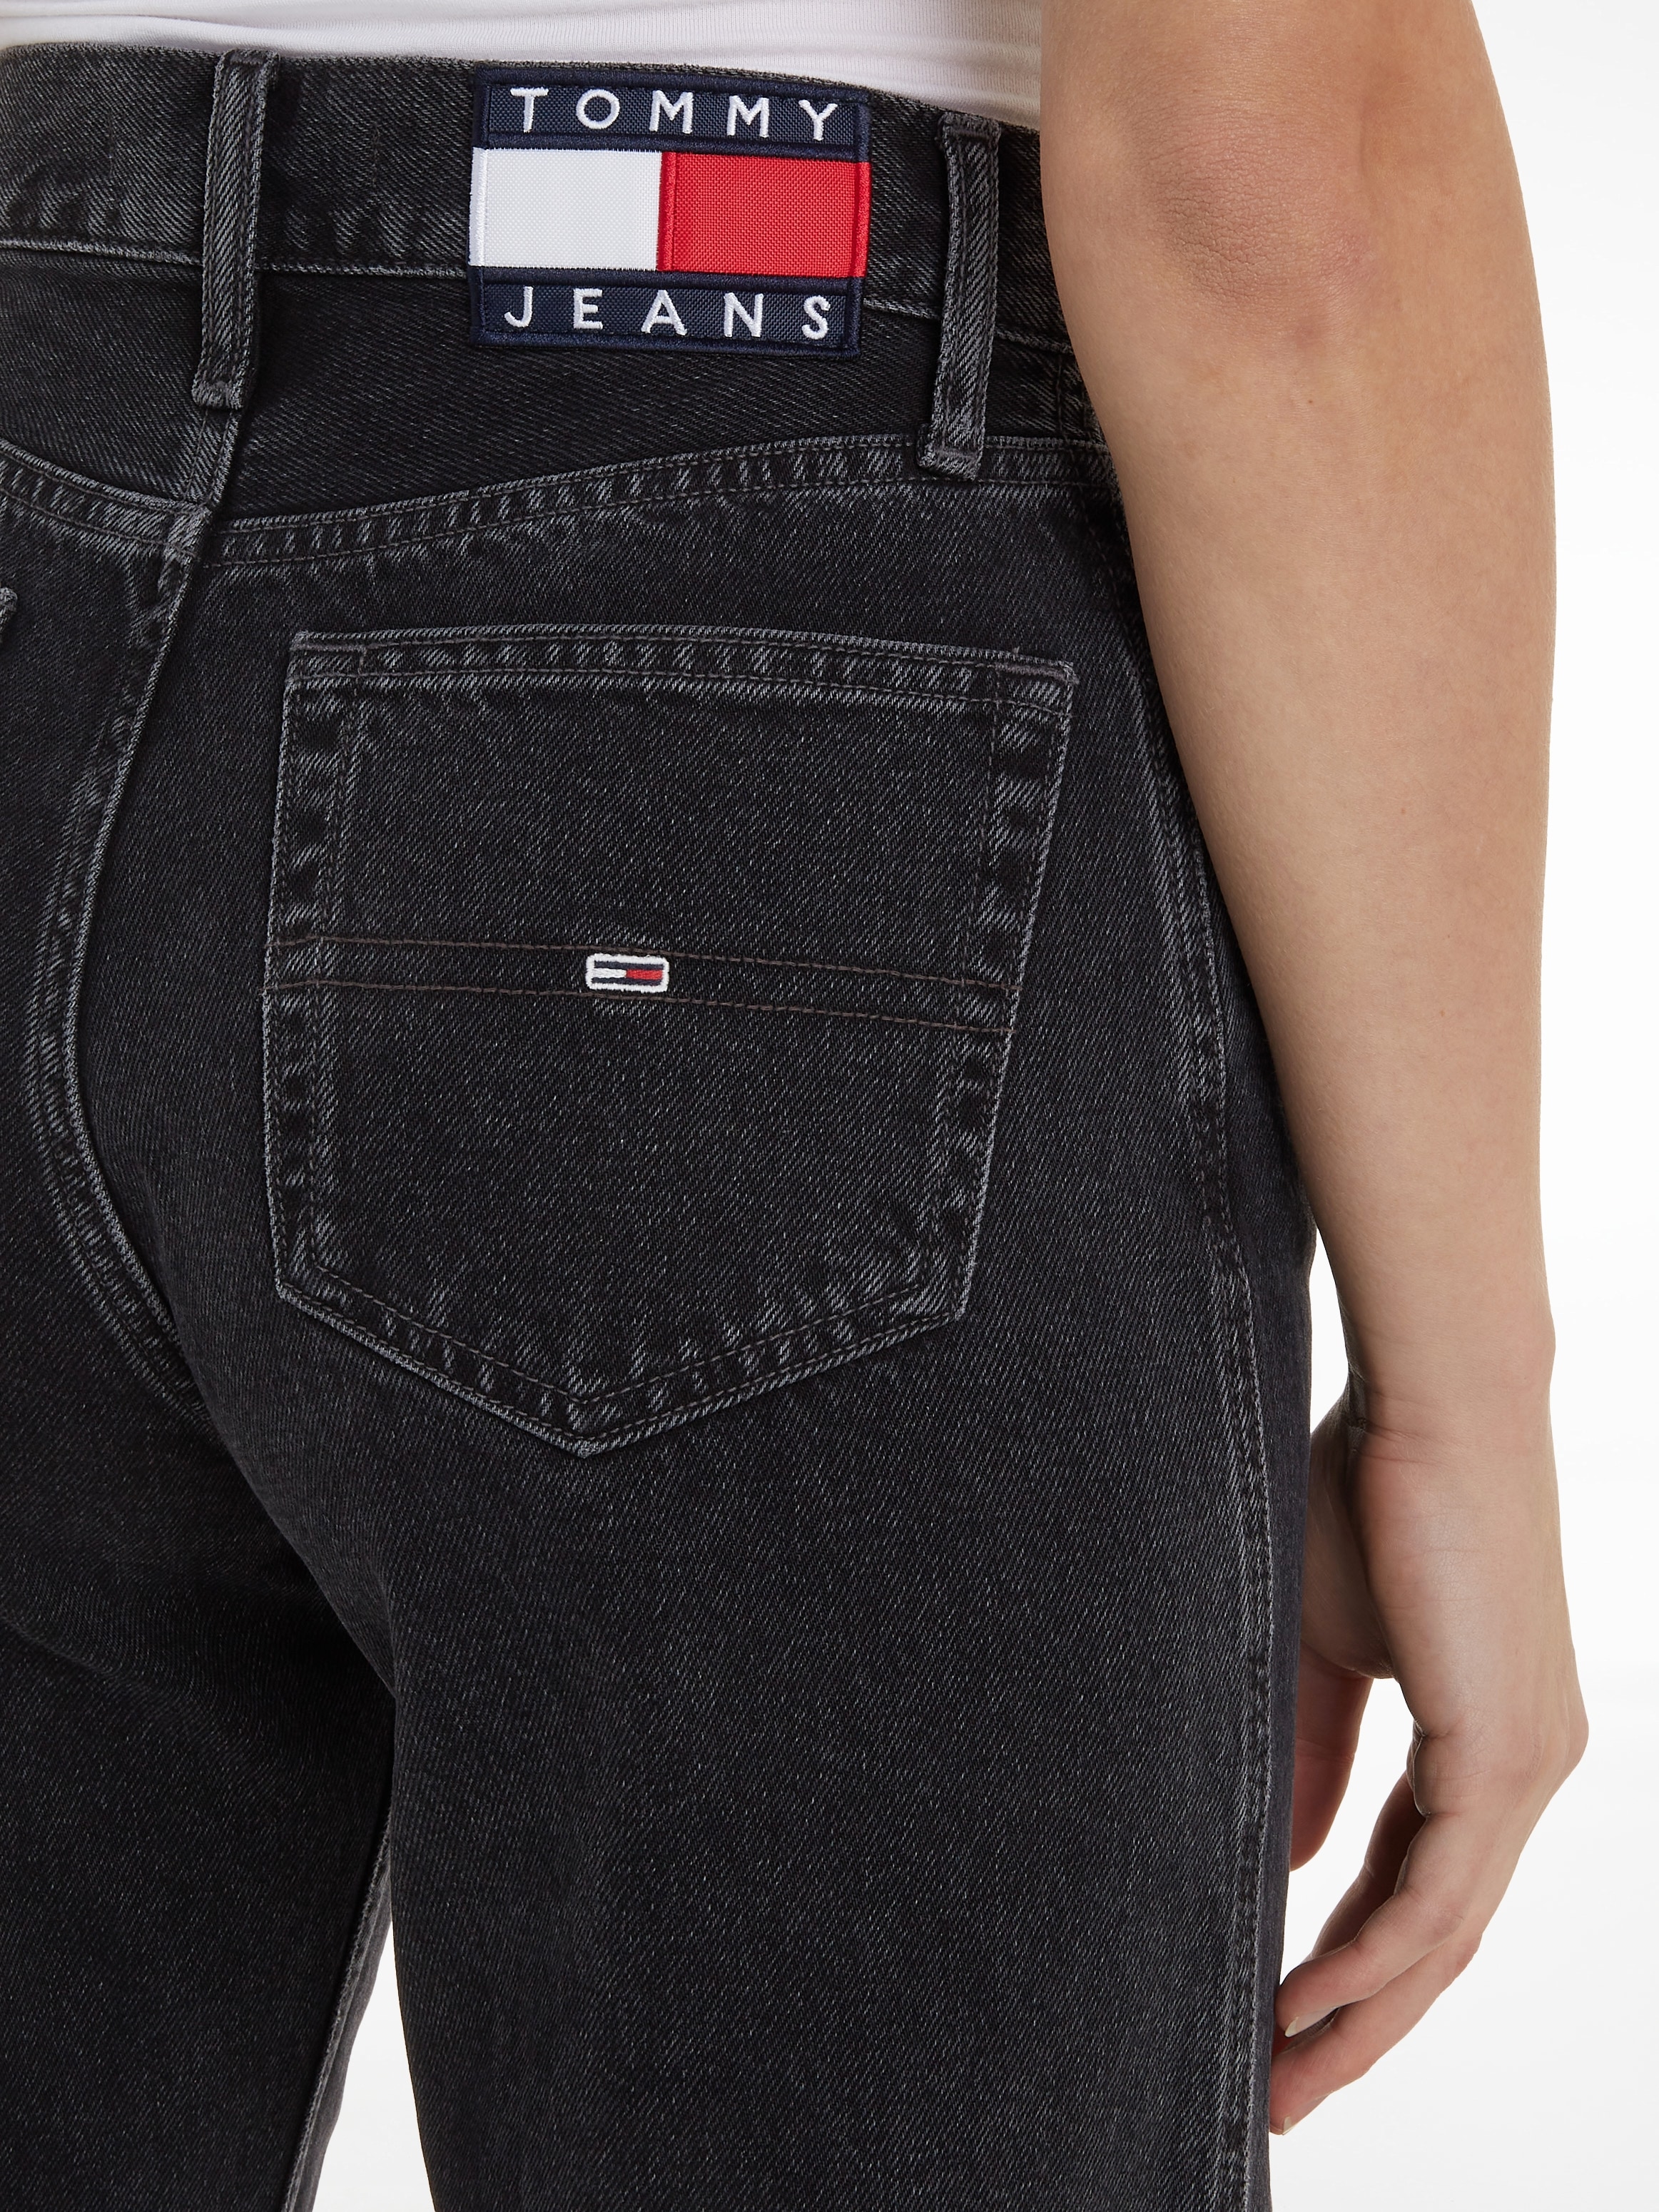 LS Jeans mit Tommy Loose-fit-Jeans shoppen Markenlabel »BETSY CG4139«, Bund MR auf dem